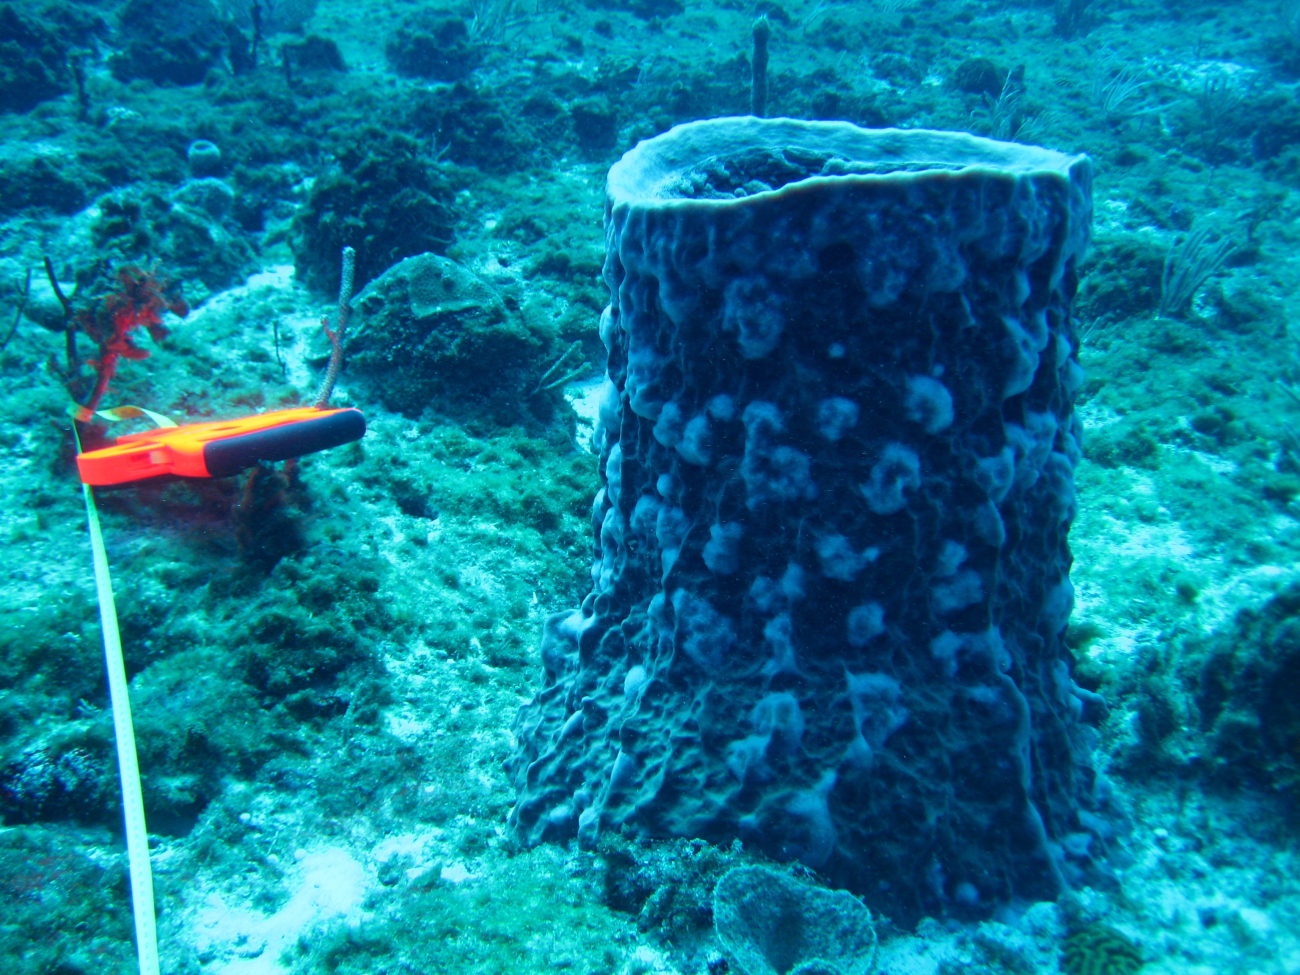 Blue barrel sponge (Porifera sp